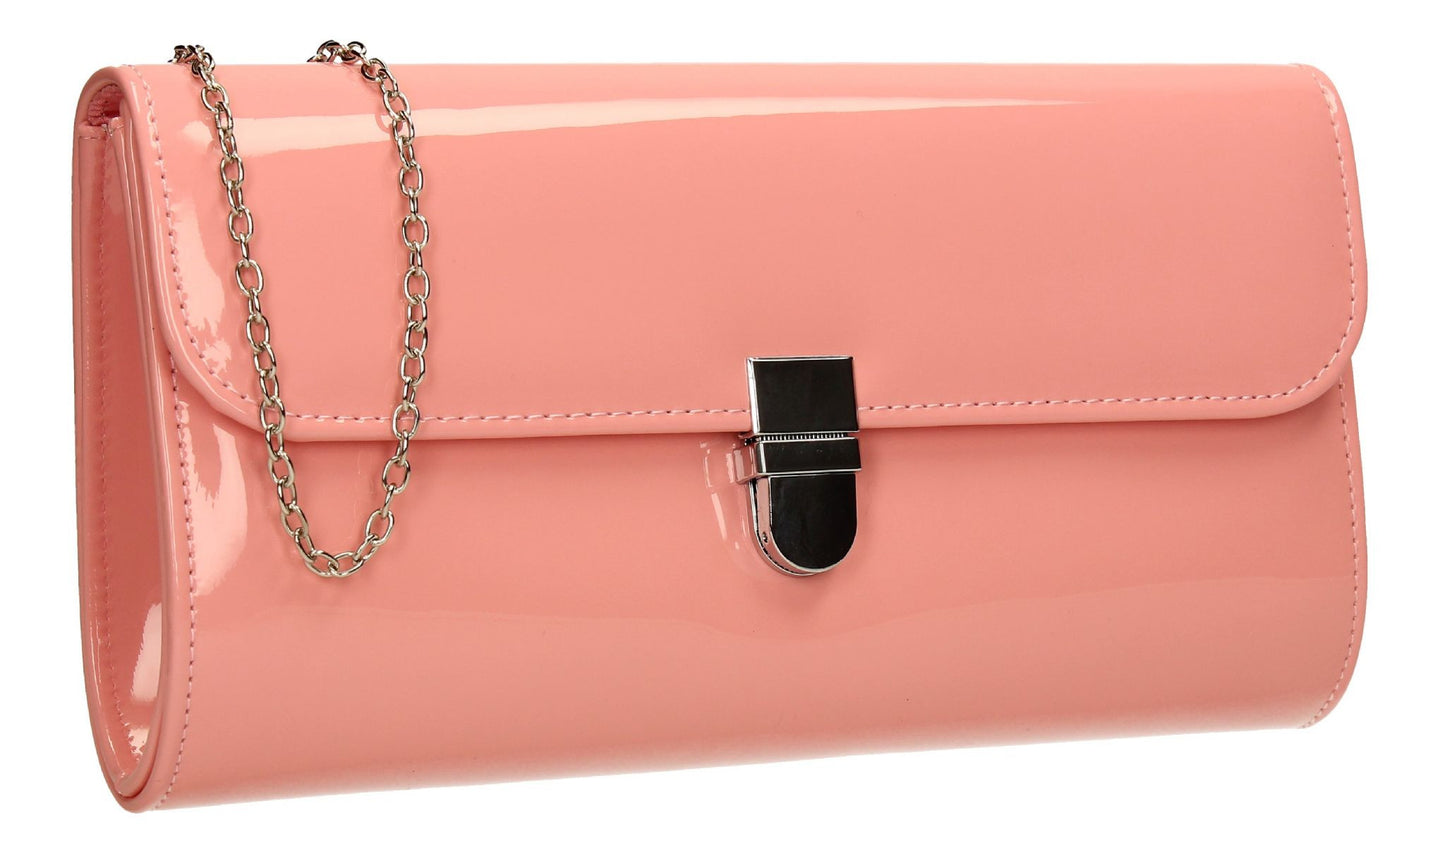 SWANKYSWANS Roxy Clutch Bag Pink Cute Cheap Clutch Bag For Weddings School and Work